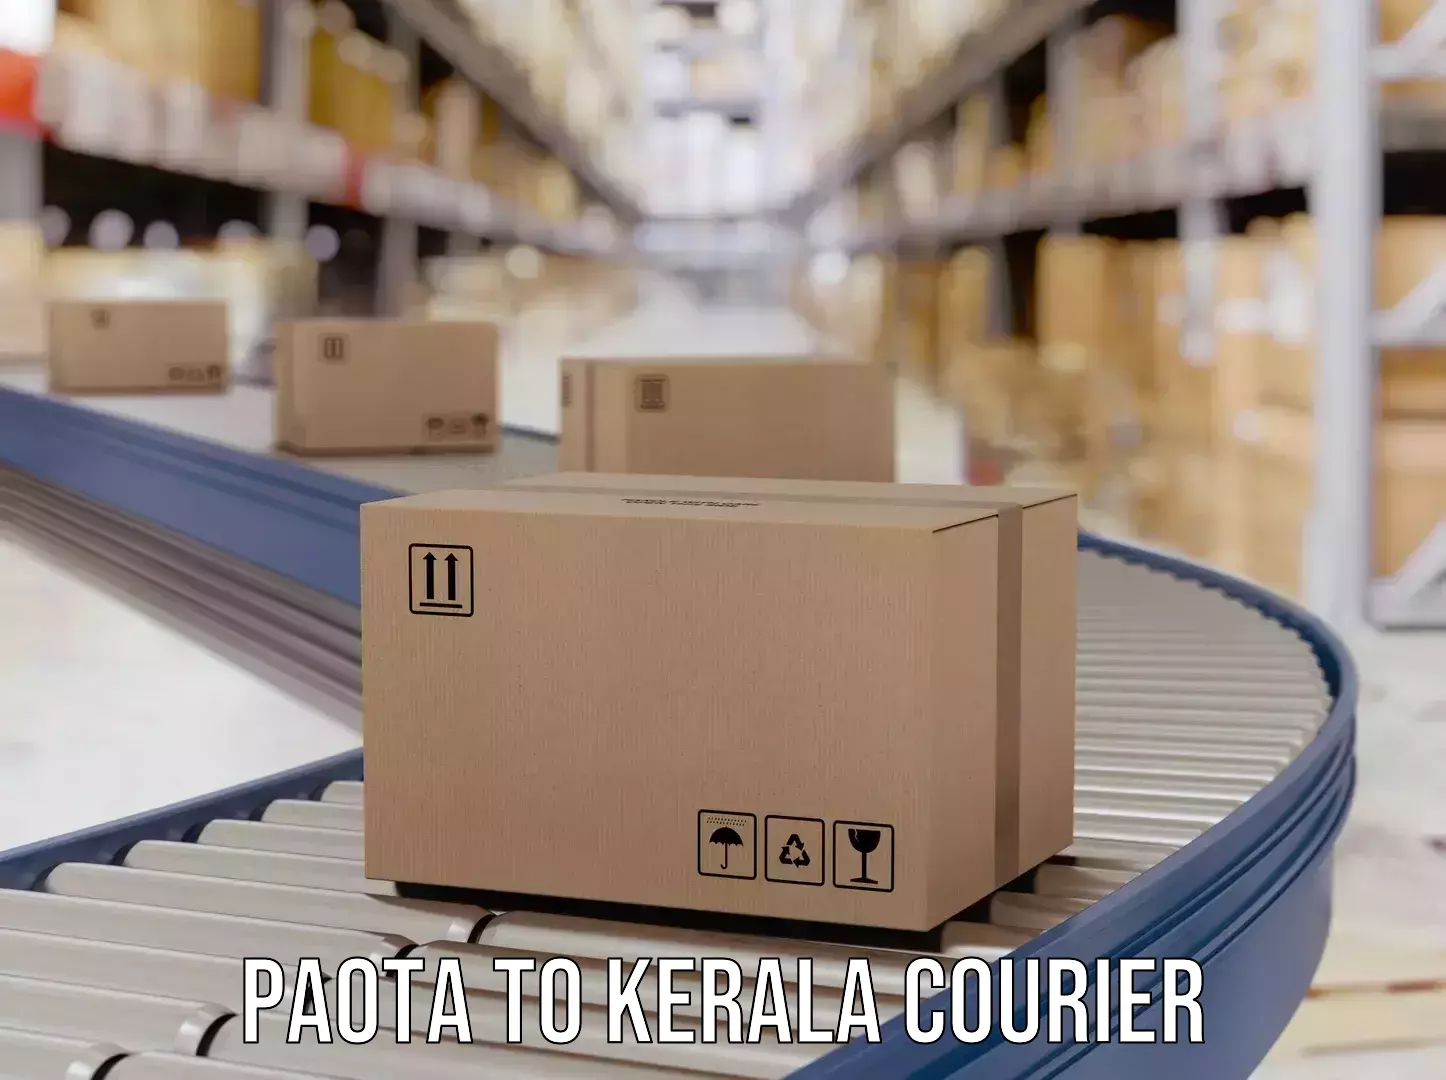 Modern delivery technologies Paota to Kerala